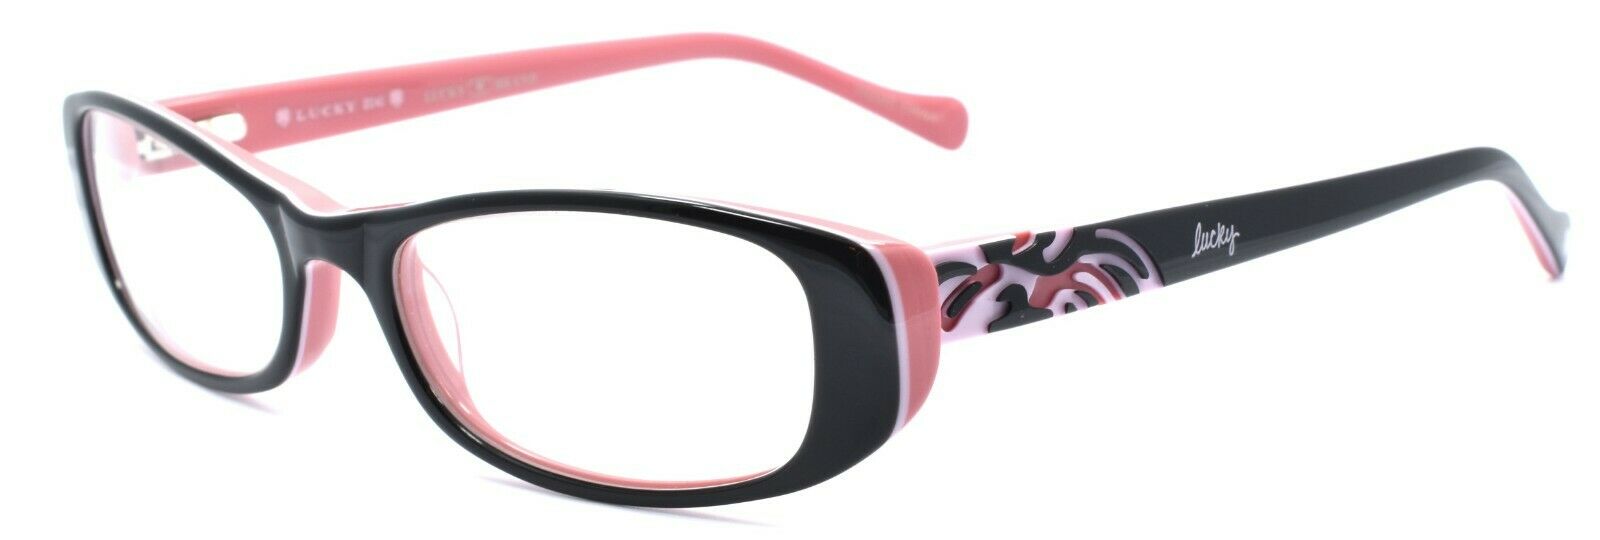 1-LUCKY BRAND Spark Plug Women's Eyeglasses Frames PETITE 49-16-130 Black + CASE-751286246155-IKSpecs